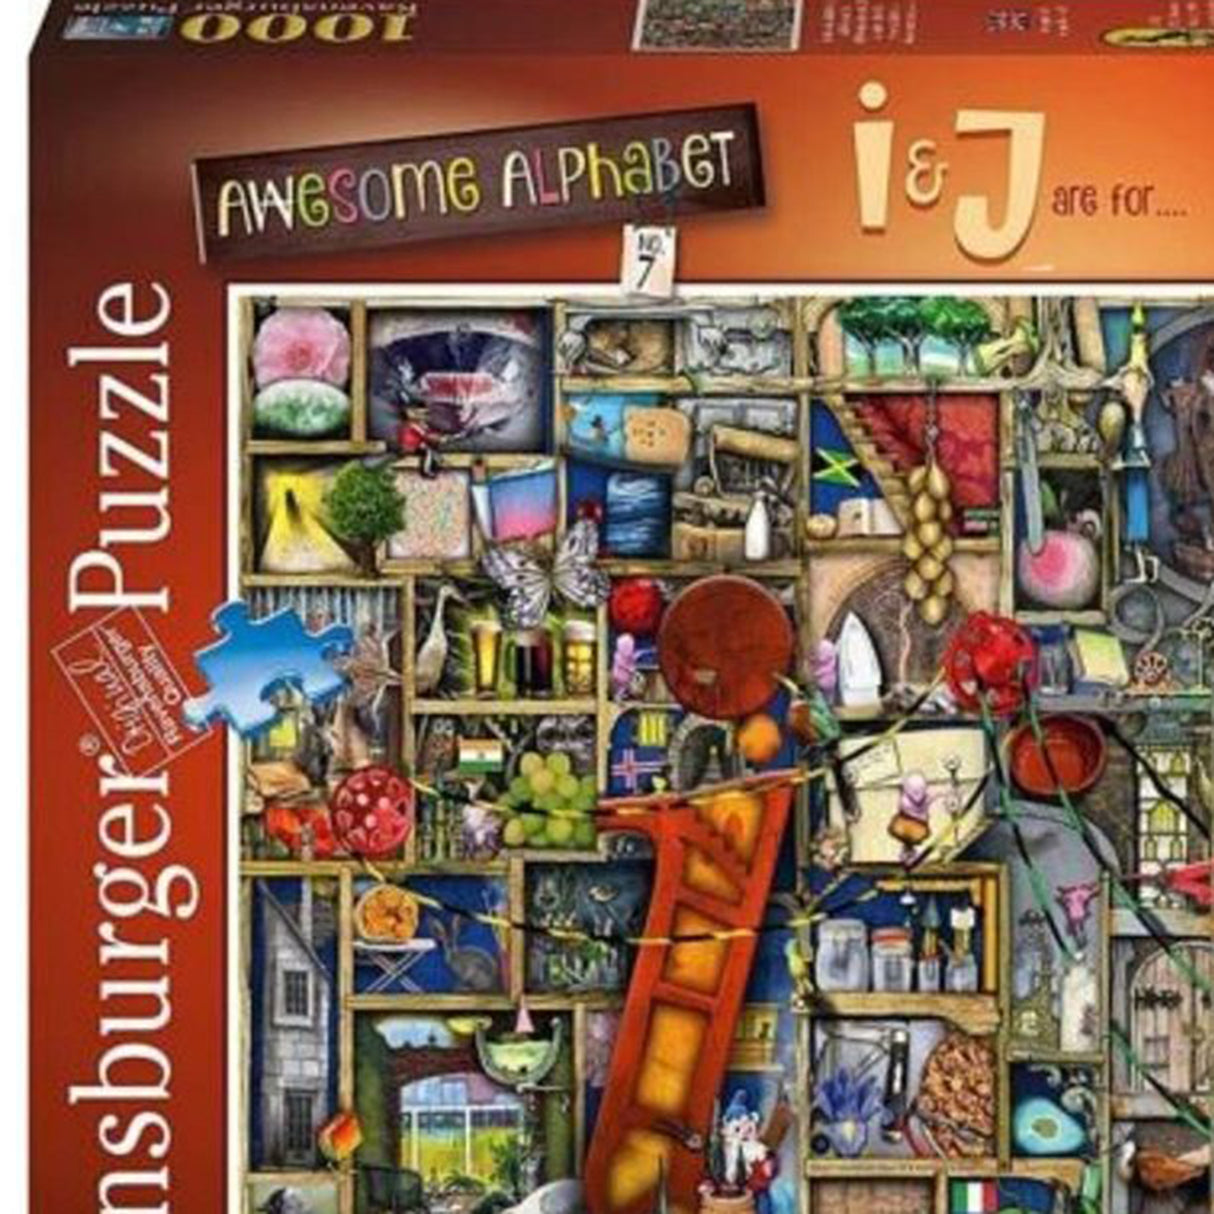 Ravensburger Awesome Alphabet I & J Puzzle (1000 pieces)